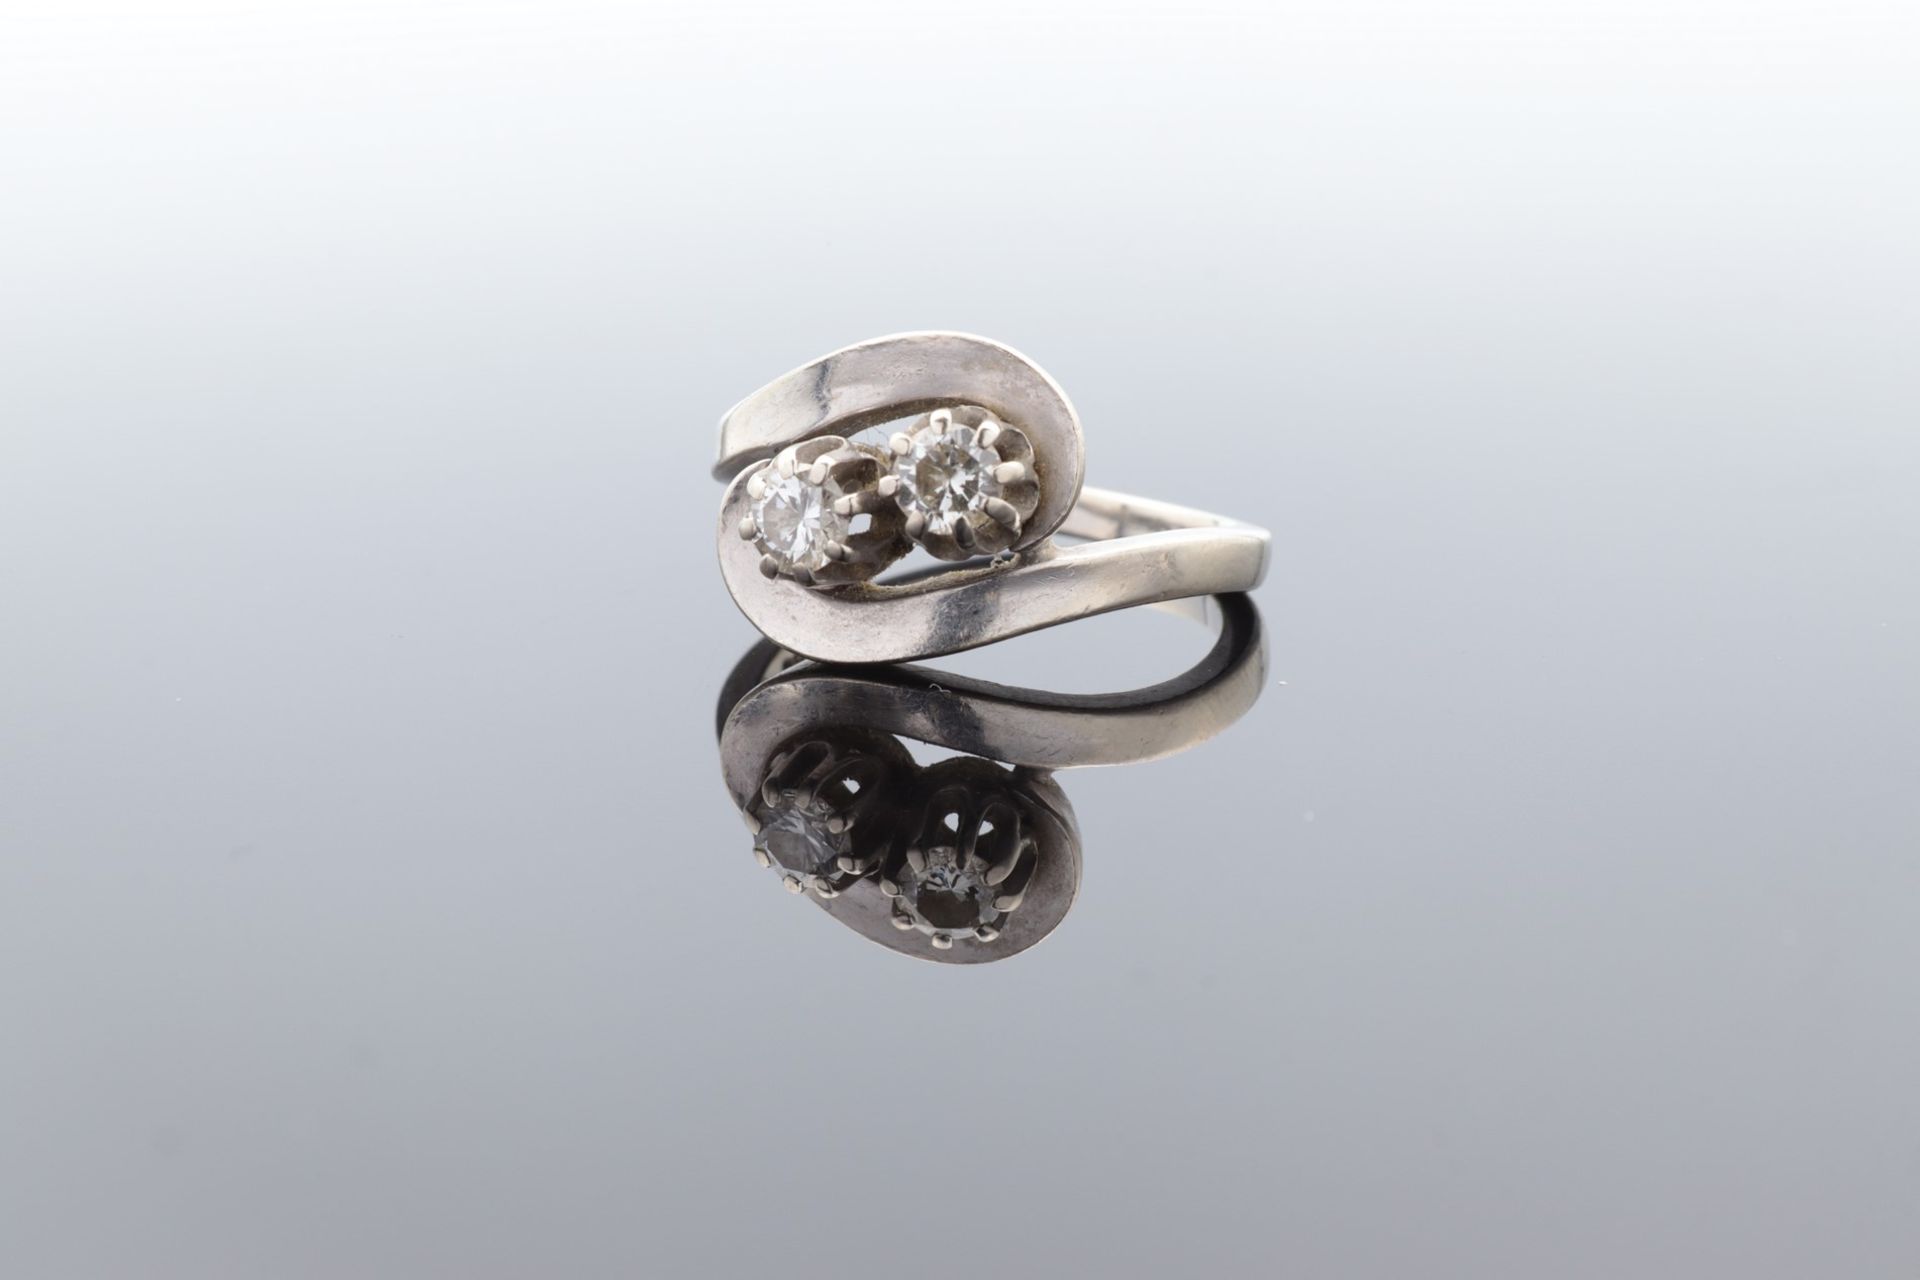 Diamant - Damenring WG 585, geschwungener Ringkopf besetzt mit 2 krappengefassten Diam